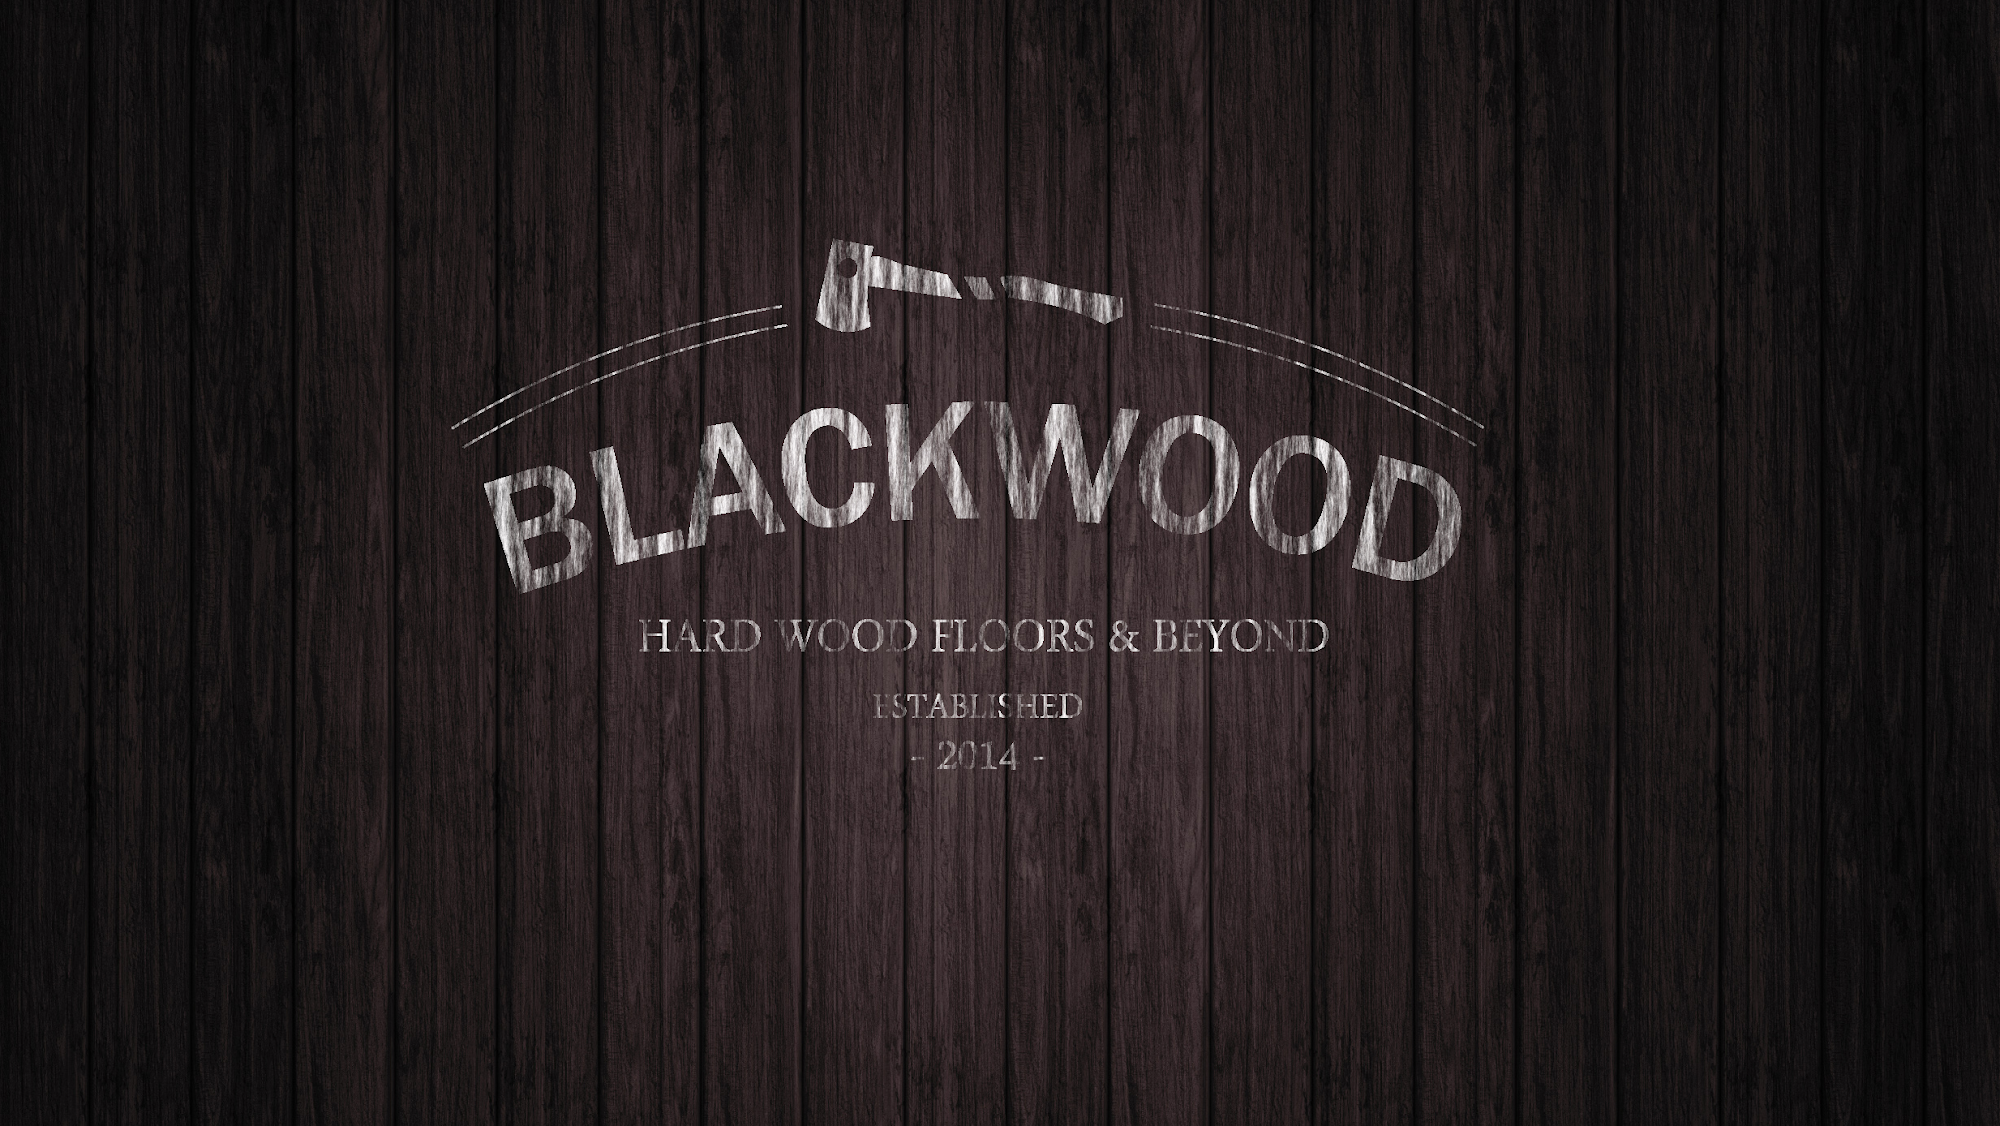 Blackwood Floors and Beyond